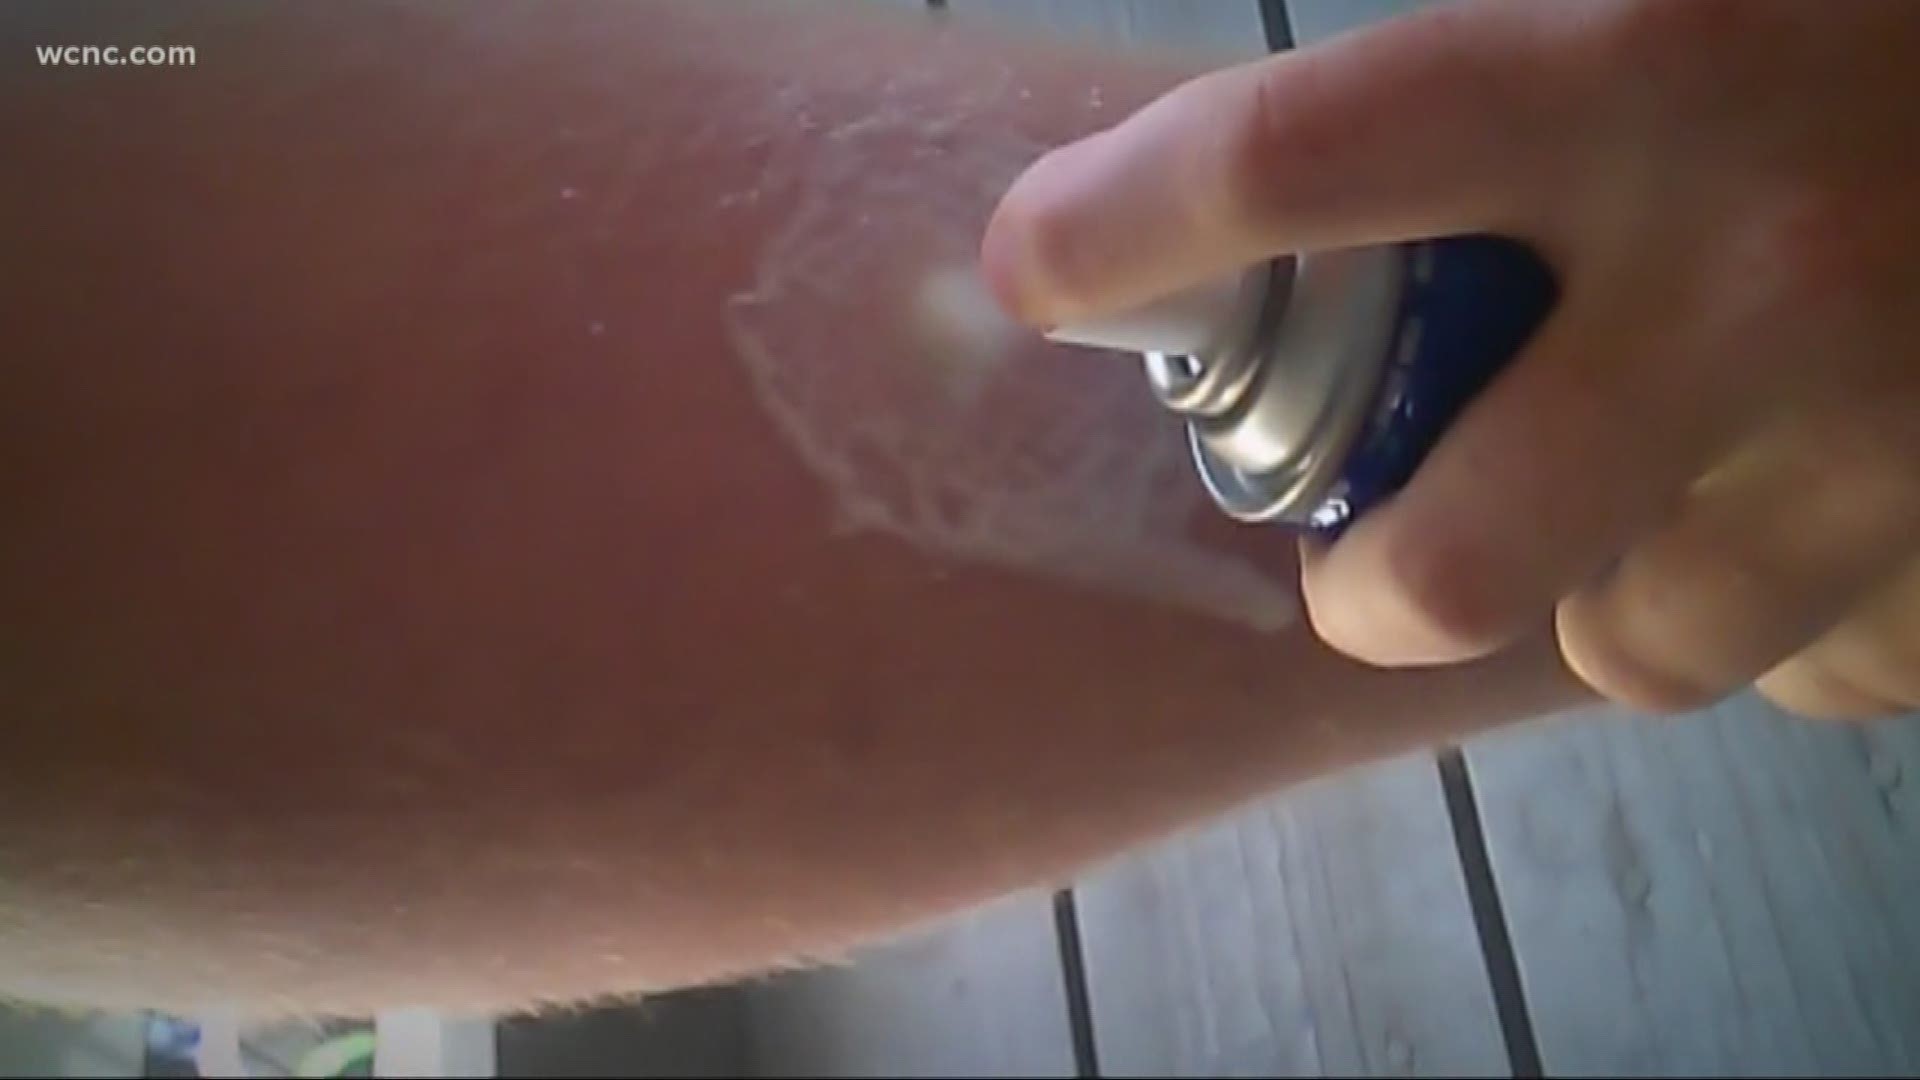 Child burned from spraying deodorant on skin